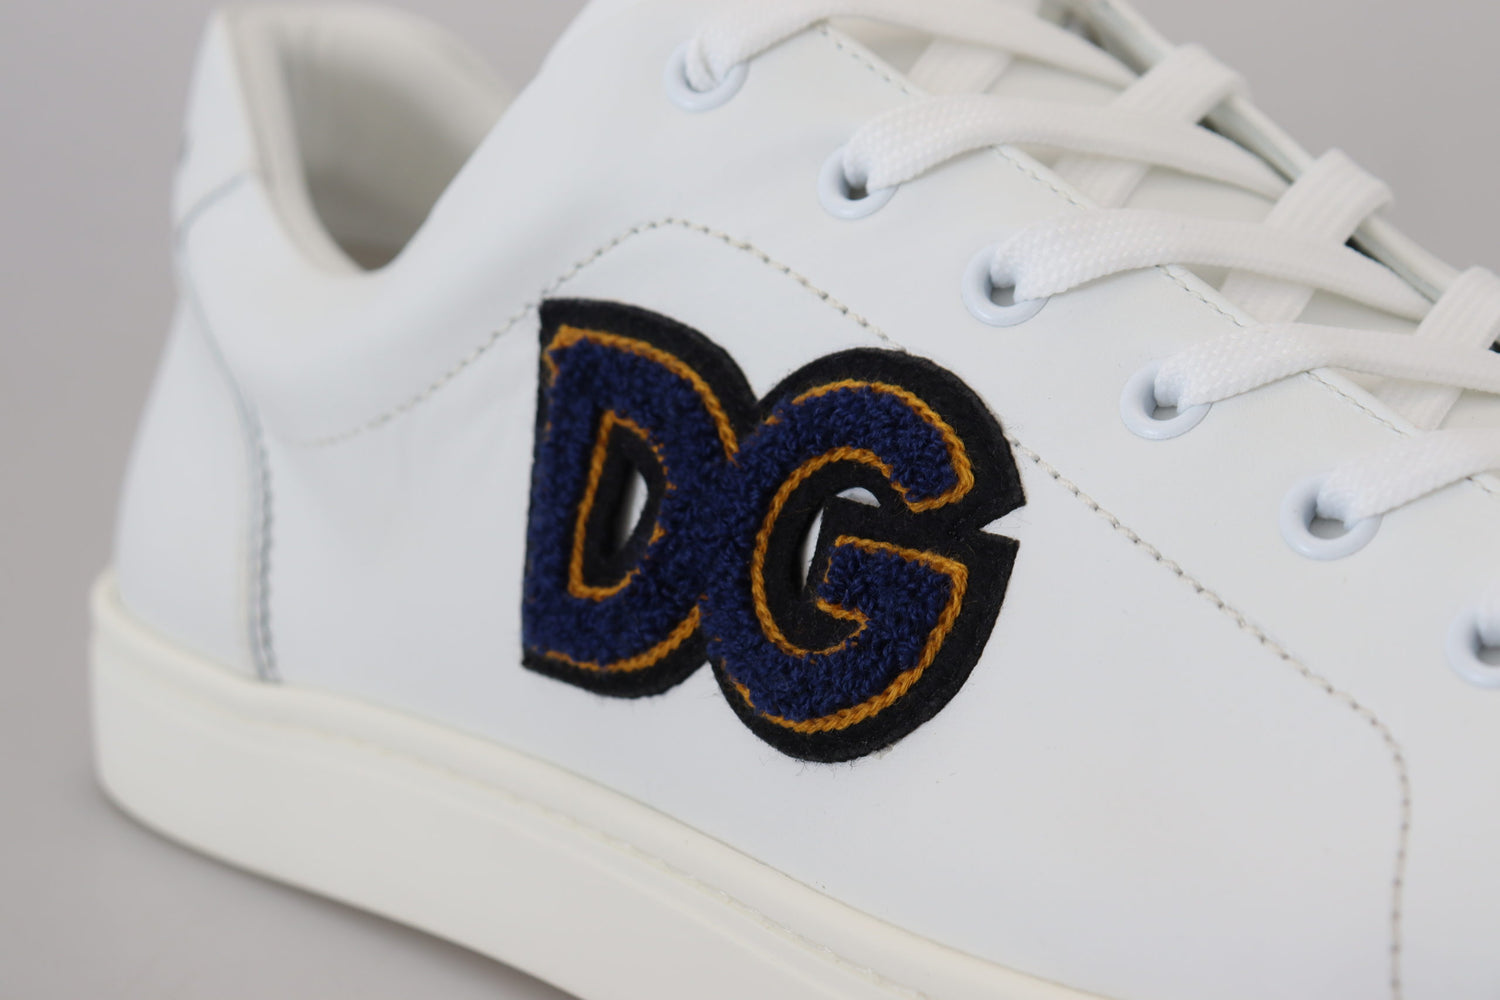 Dolce & Gabbana White Leather DG Logo Casual Sneakers Shoes - DEA STILOSA MILANO